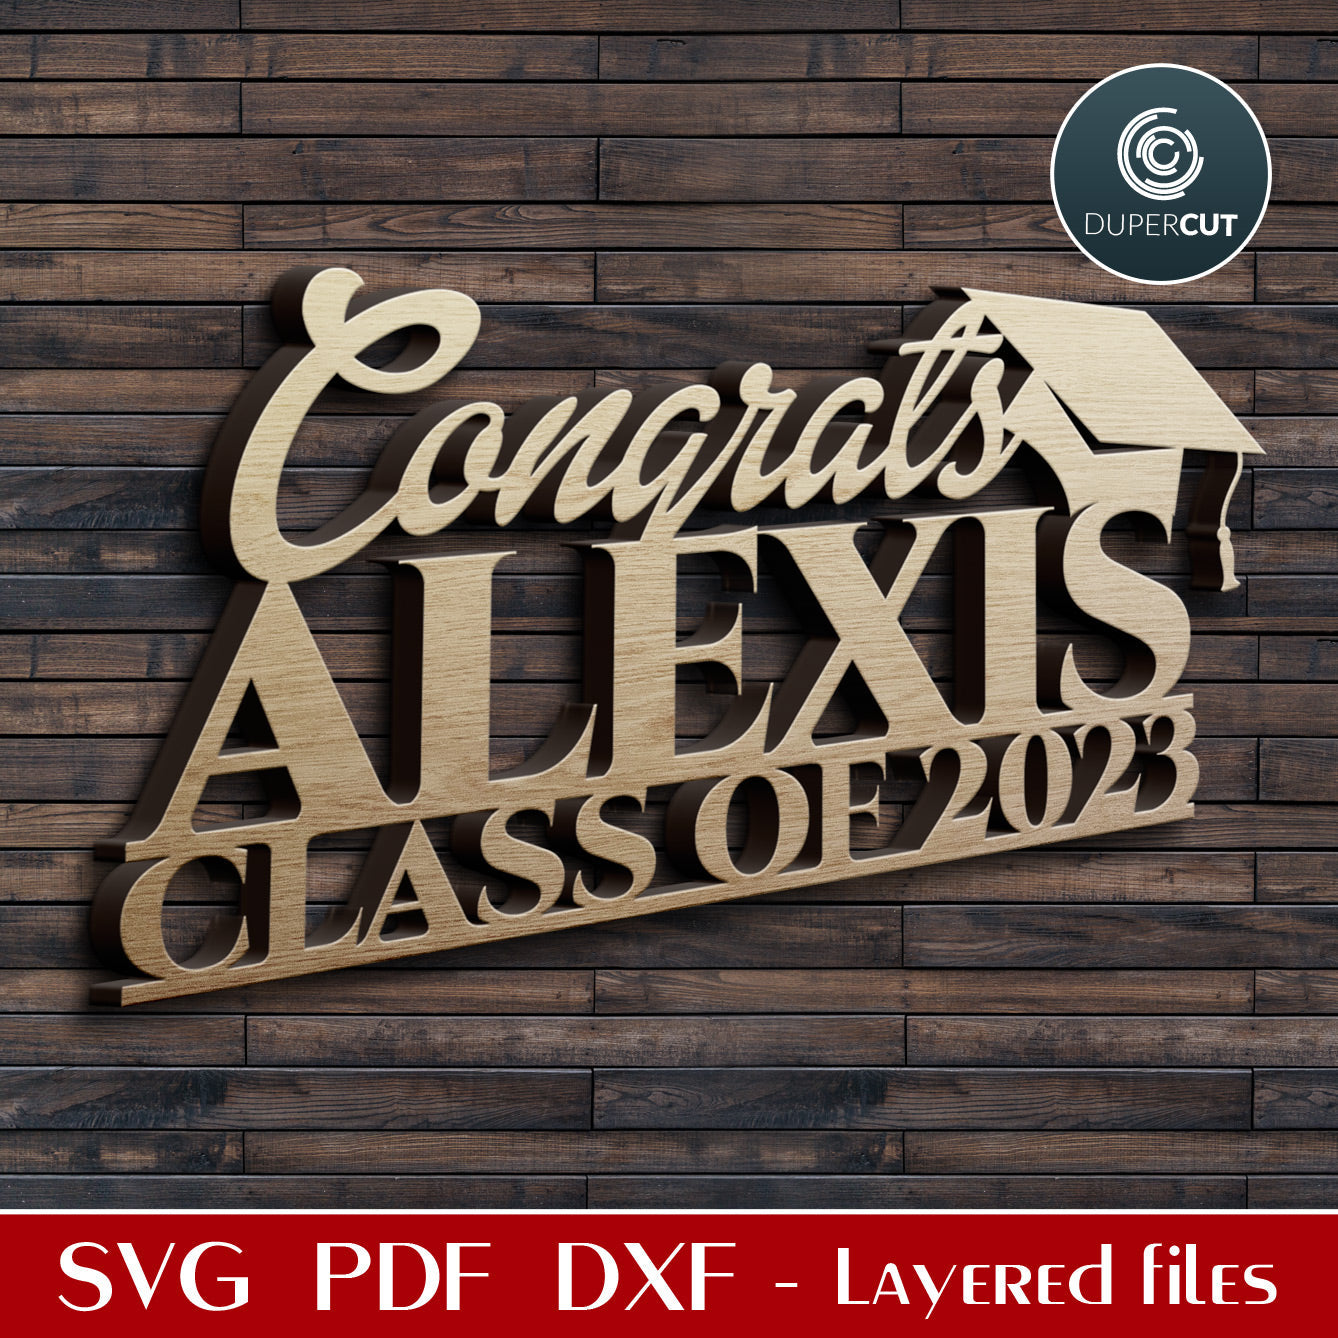 Class of 2023 Congrats Grad - add custom name - SVG DXF personalized files for laser cut machines Glowforge, Cricut, Silhouette, CNC plasma, scrollsaw pattern by www.DuperCut.com